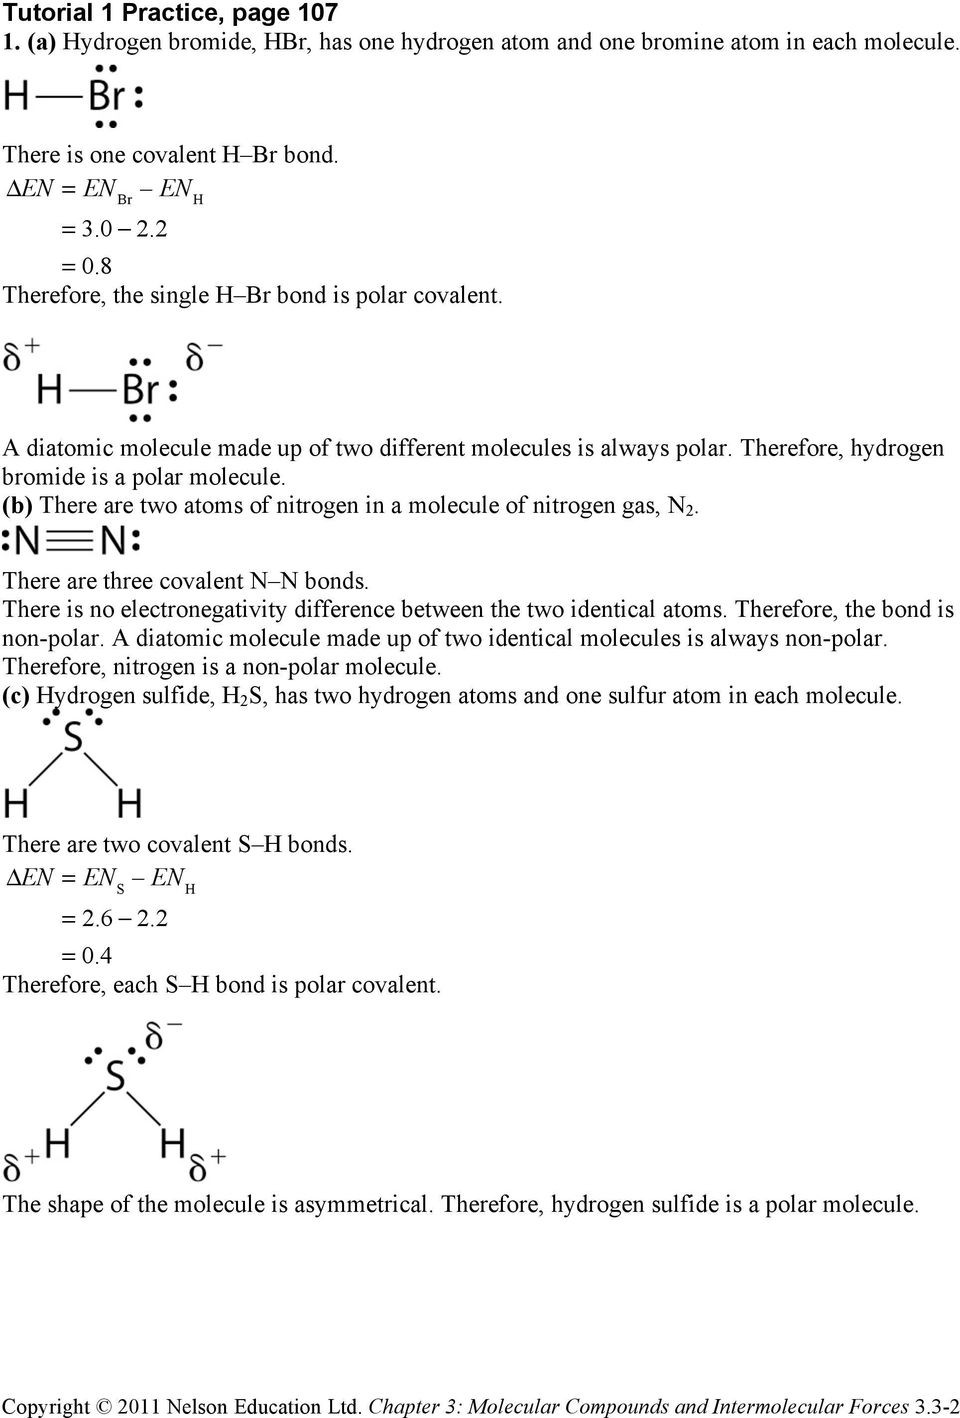 Worksheet Polarity Of Bonds Answers Section 3 3 Polar Bonds and Polar Molecules Pdf Free Download